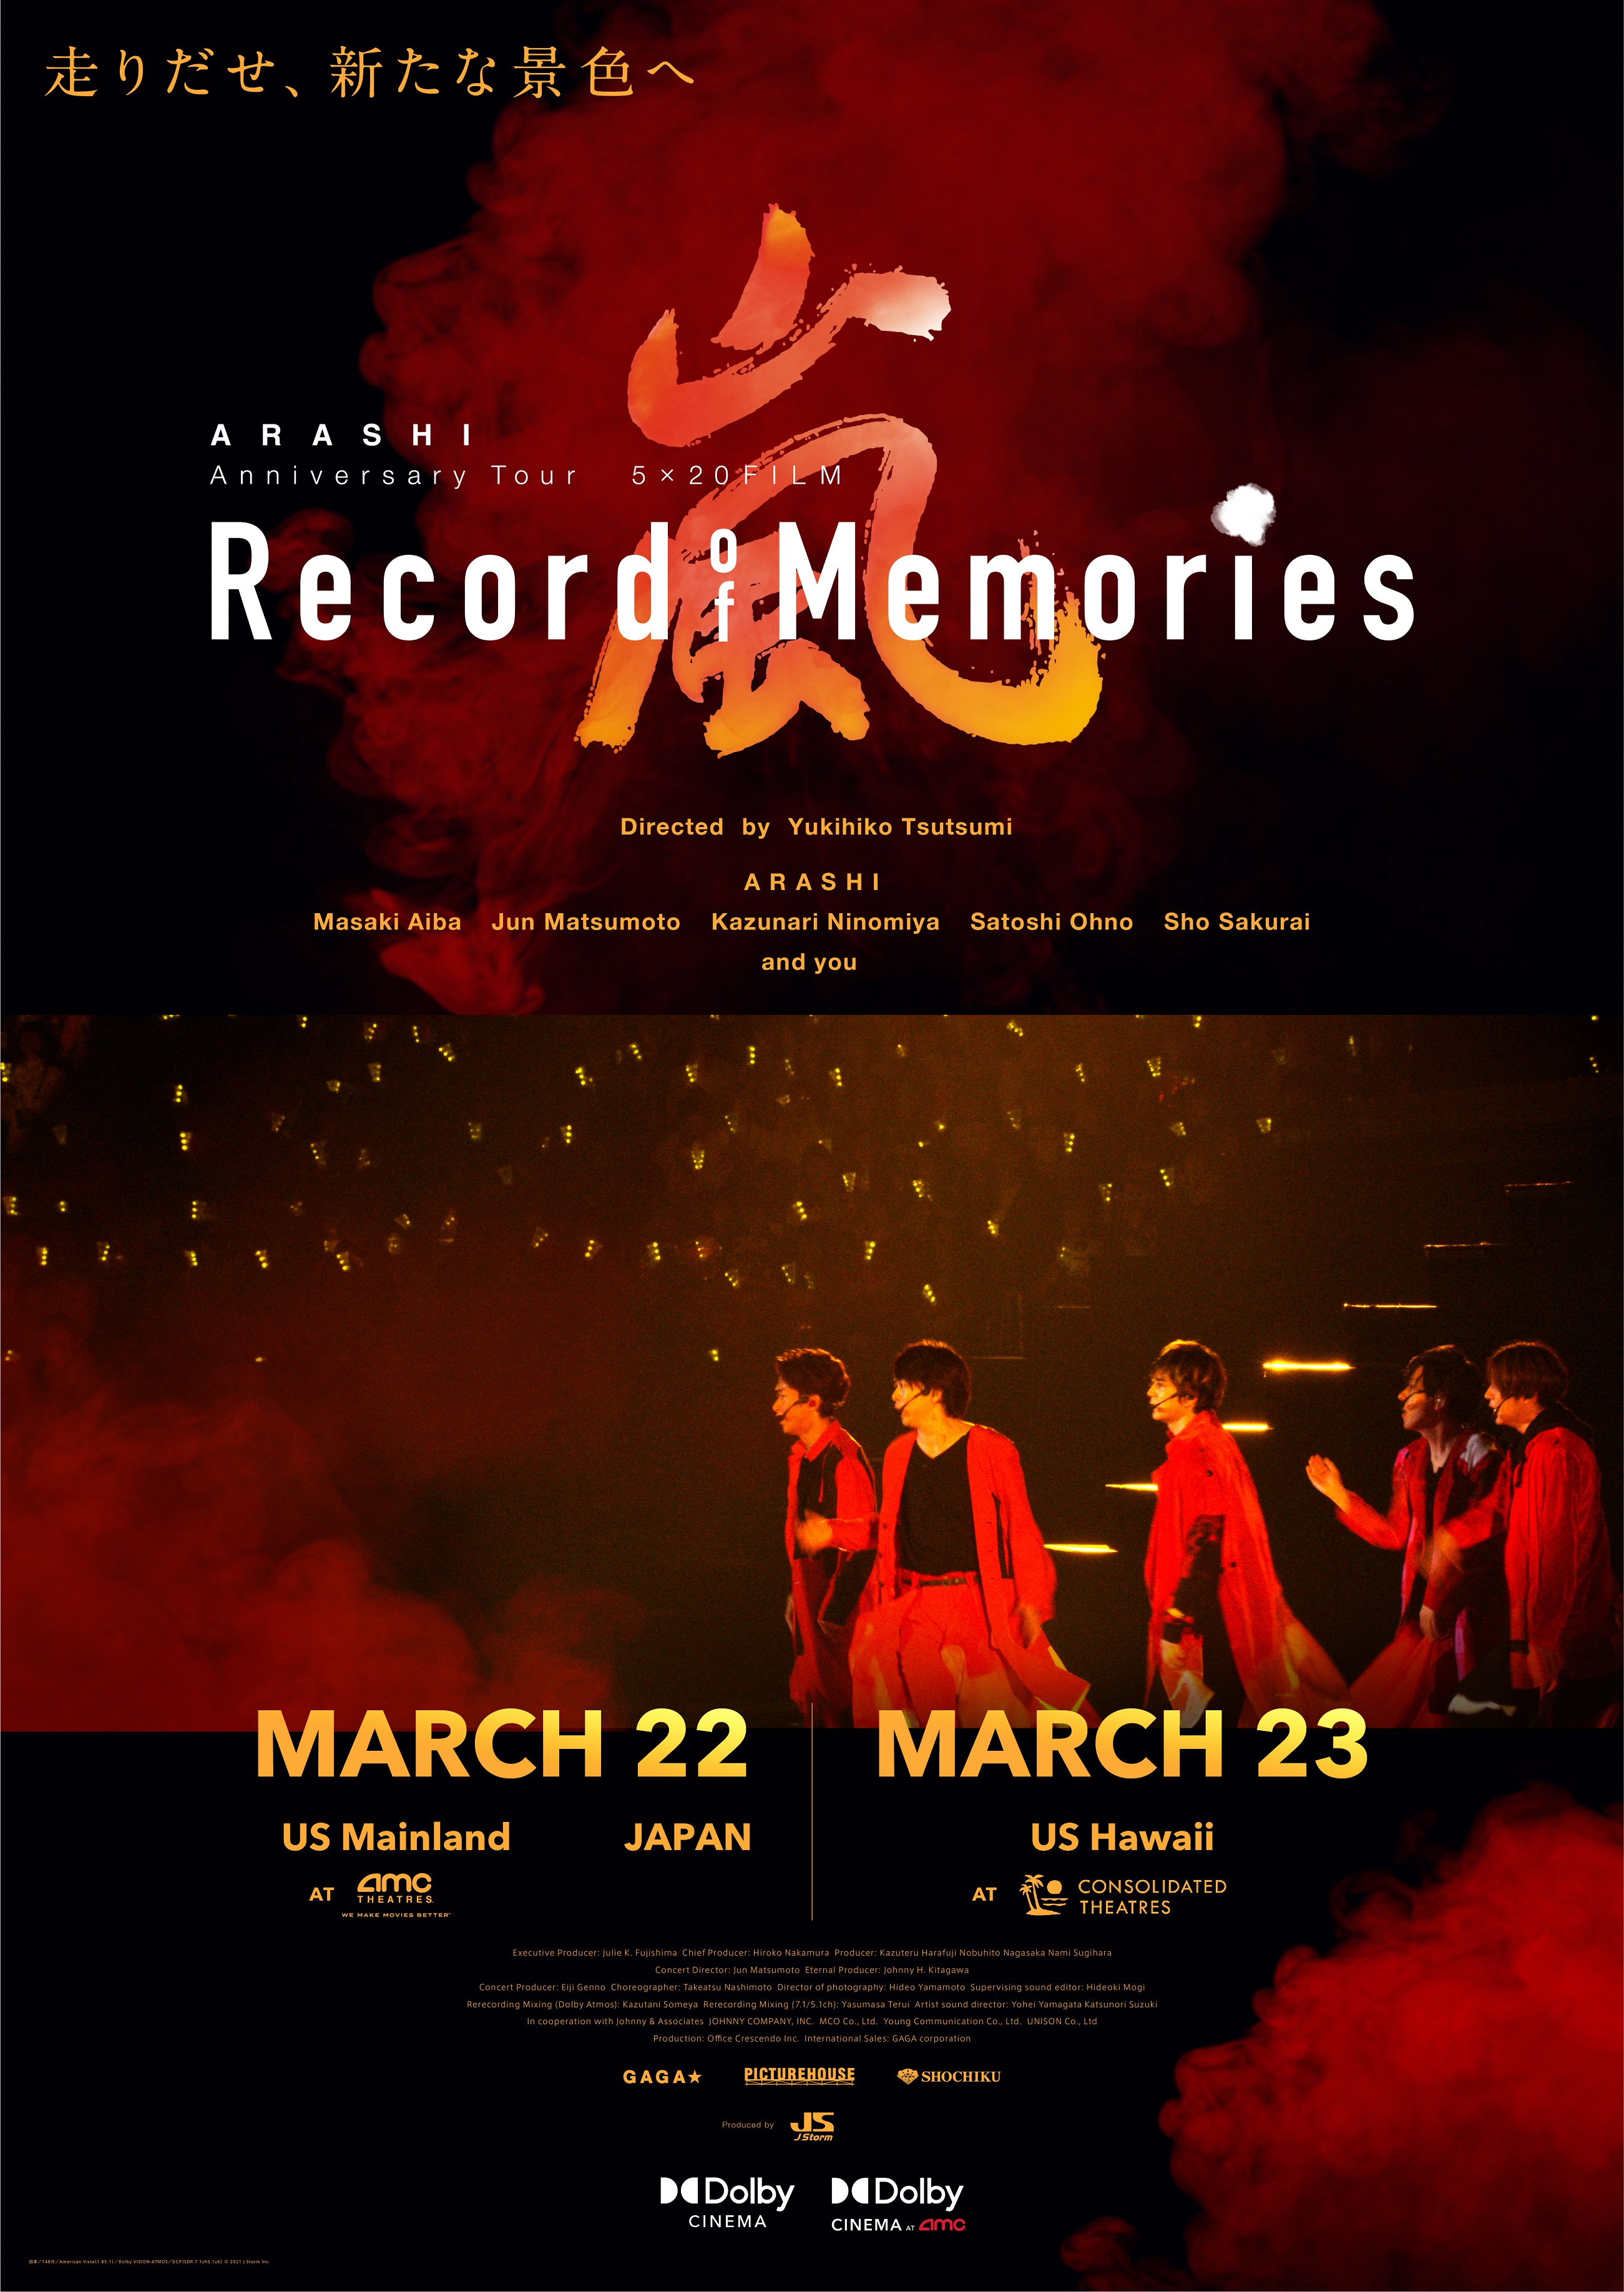 ARASHI 5×20 FILM “Record of Memories” on Twitter: 